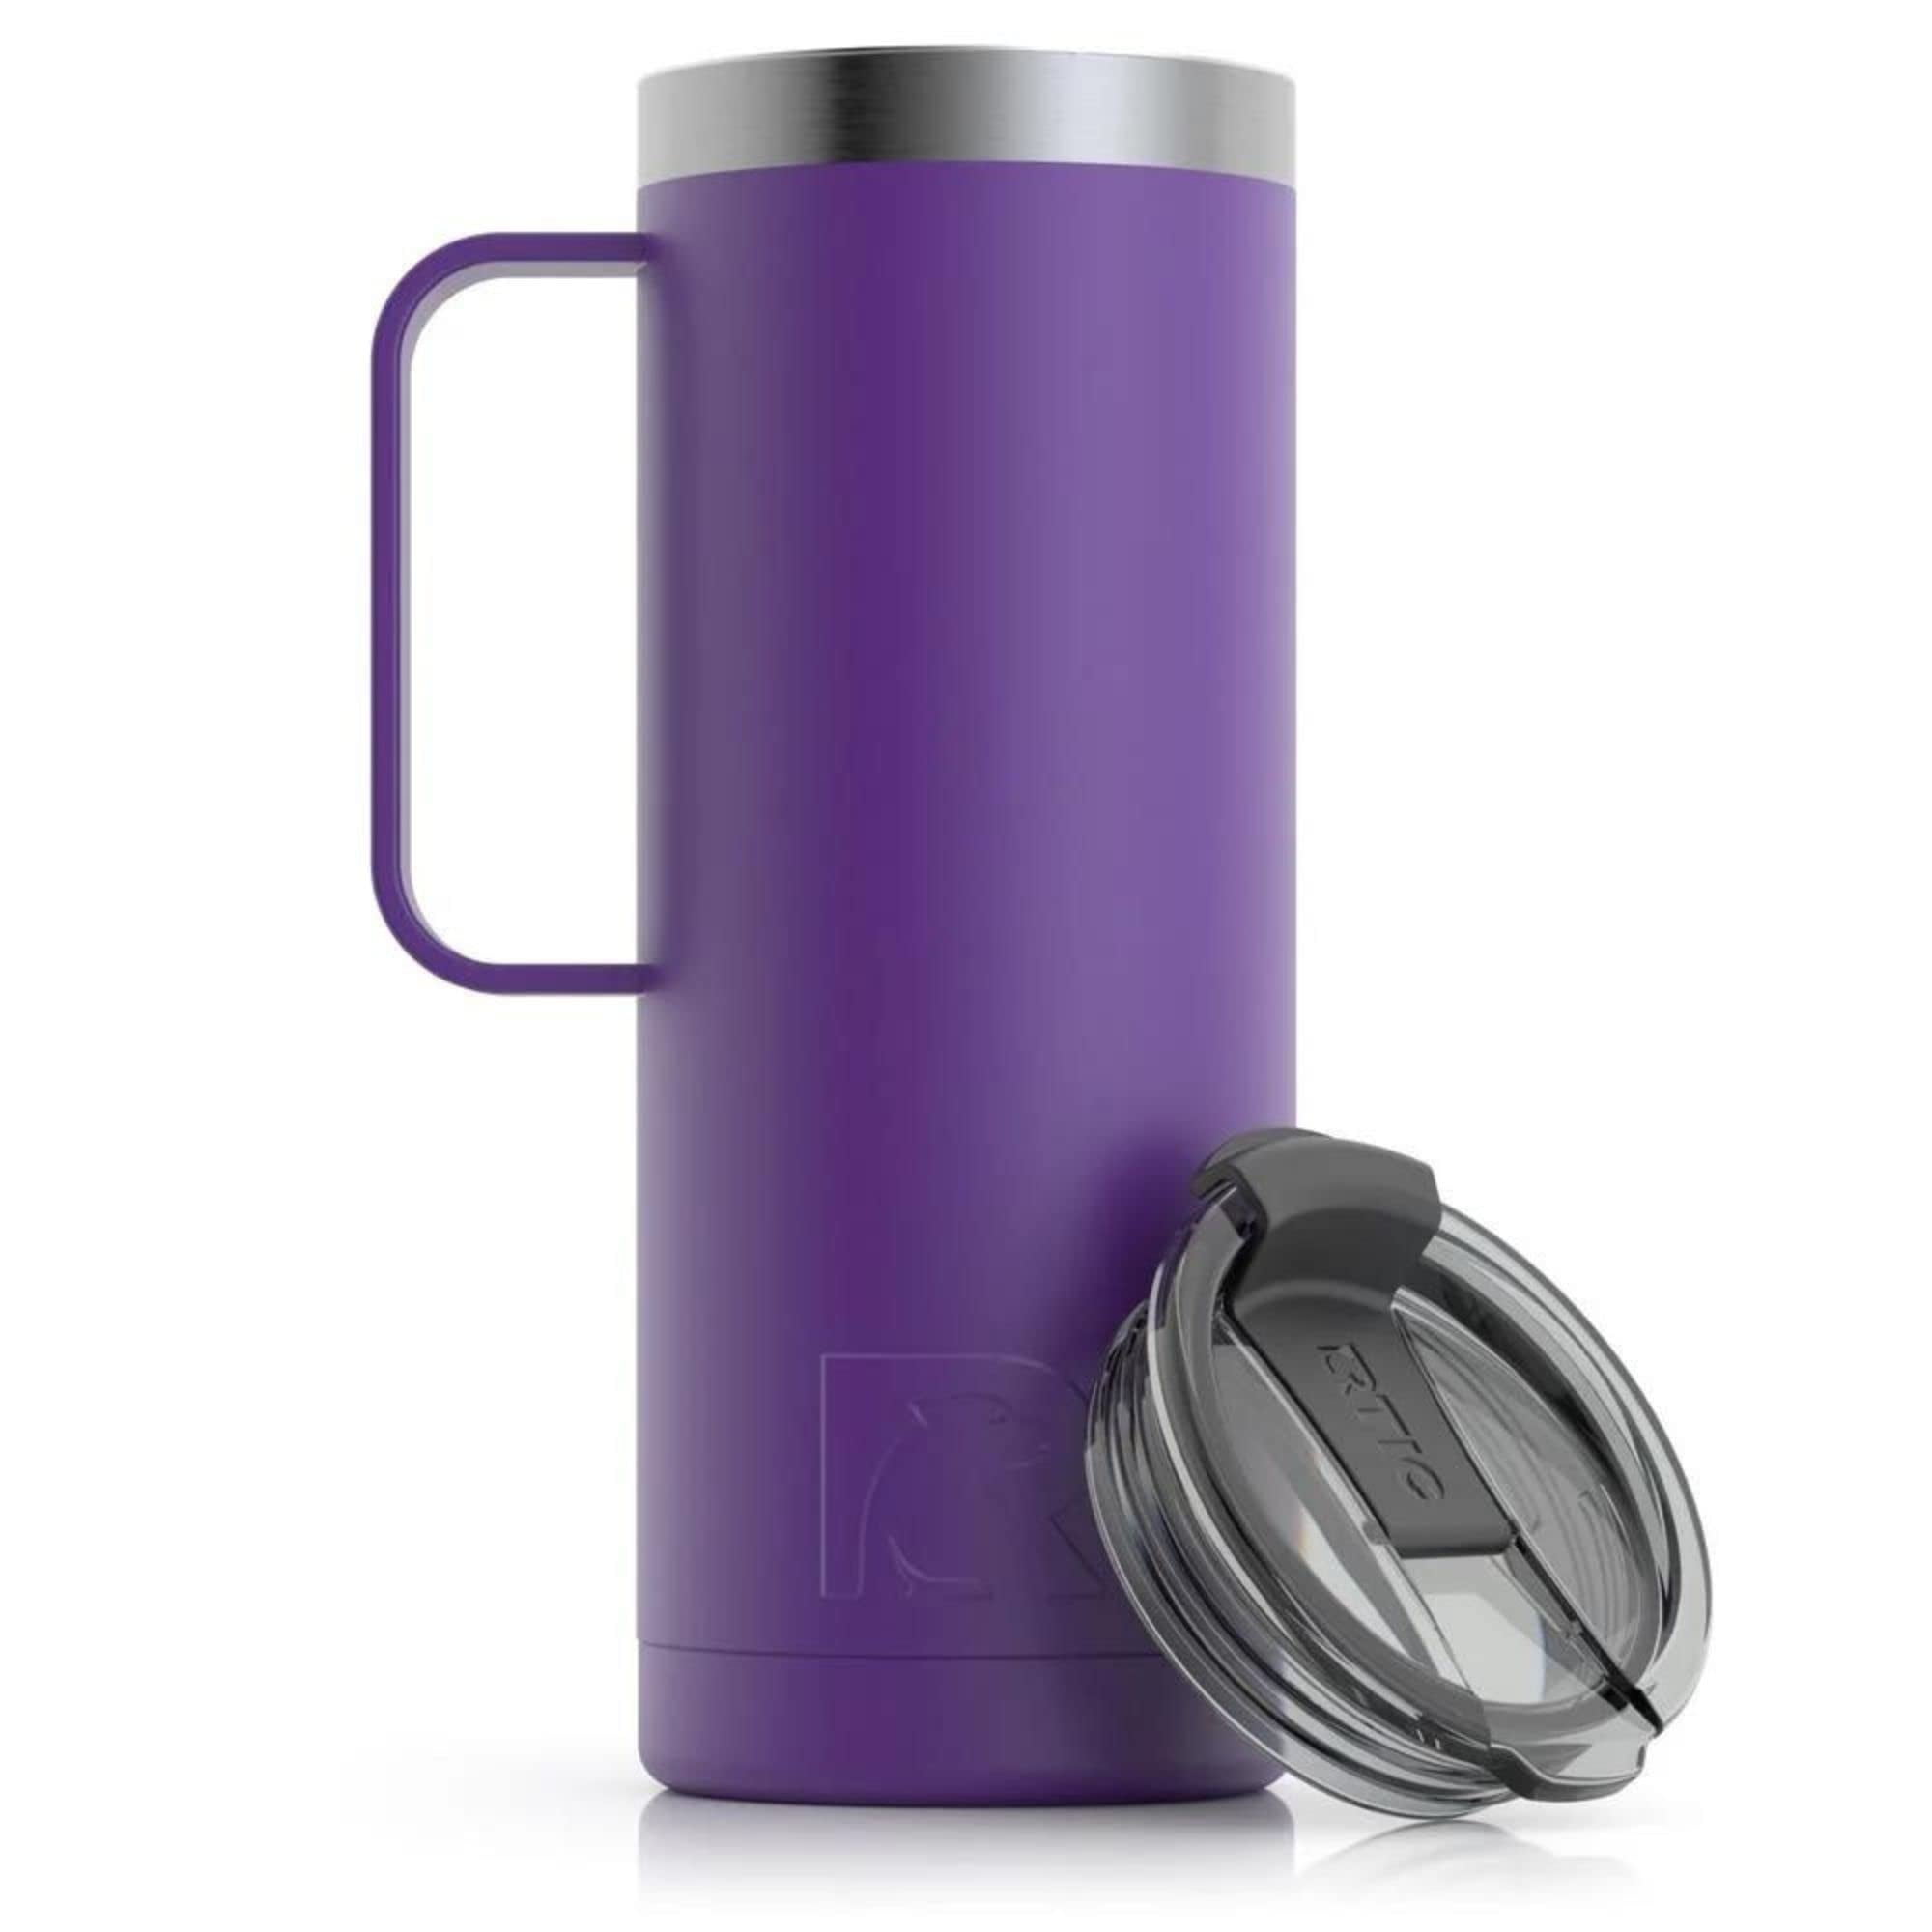 Rothco Insulated Stainless Steel Portable Mug With Carabiner Handle – 15 oz